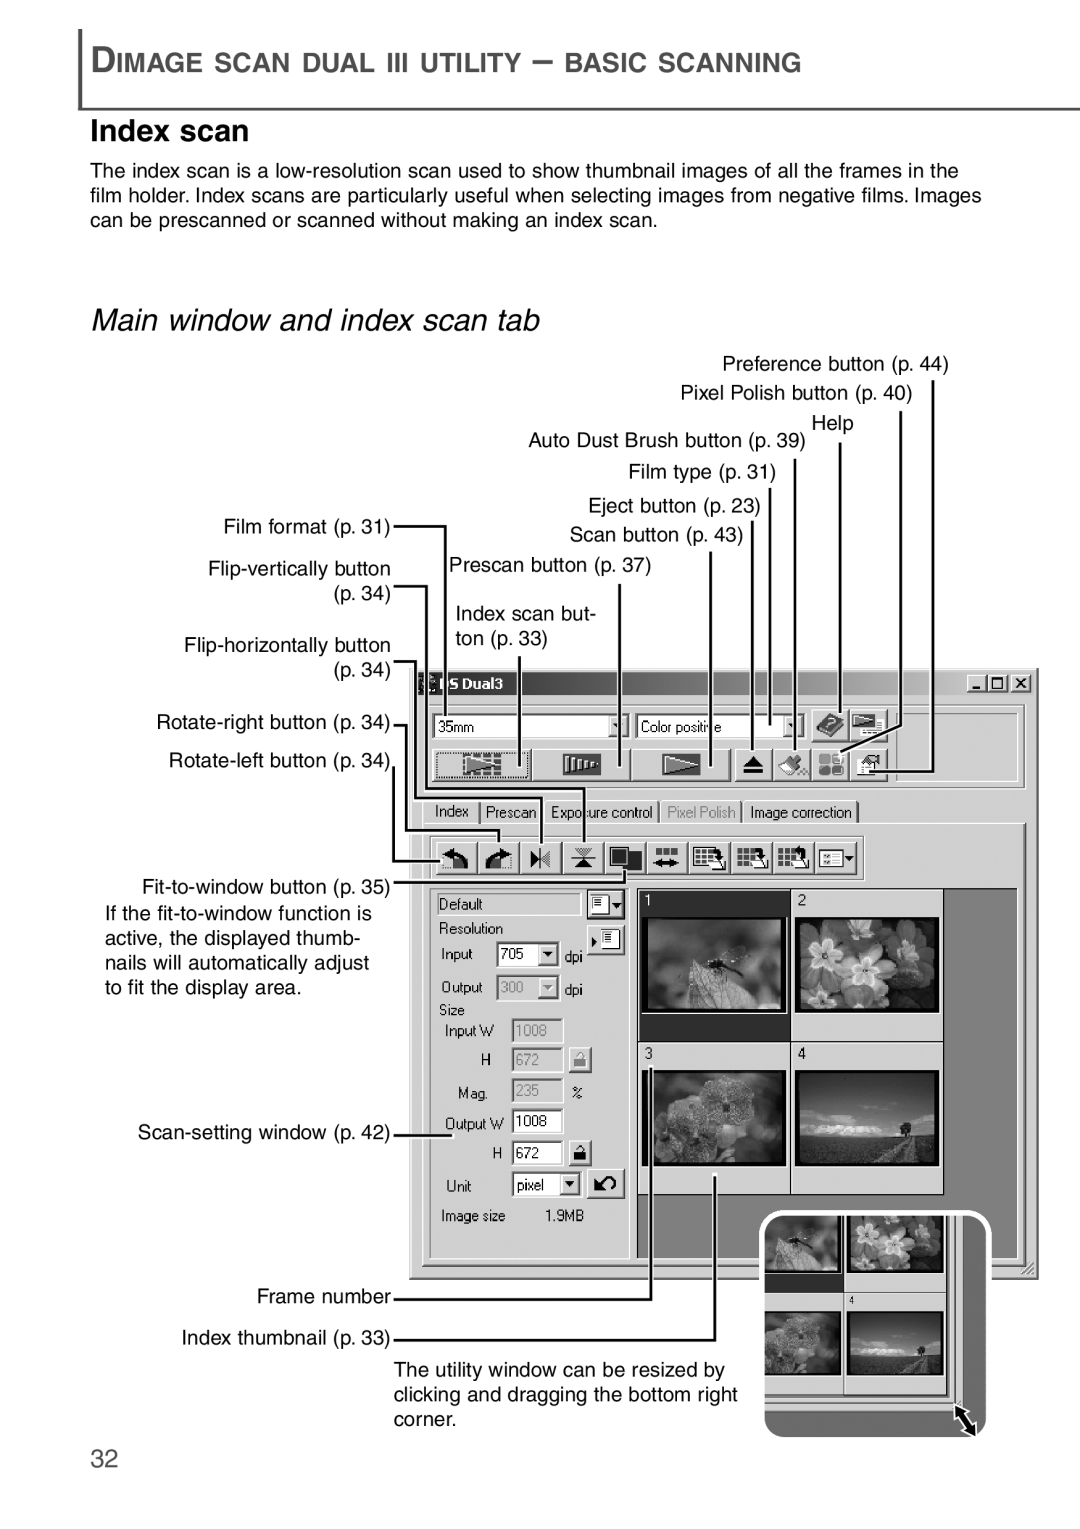 Konica Minolta AF-2840 Index scan, Main window and index scan tab, Dimage Scan Dual Iii Utility – Basic Scanning 